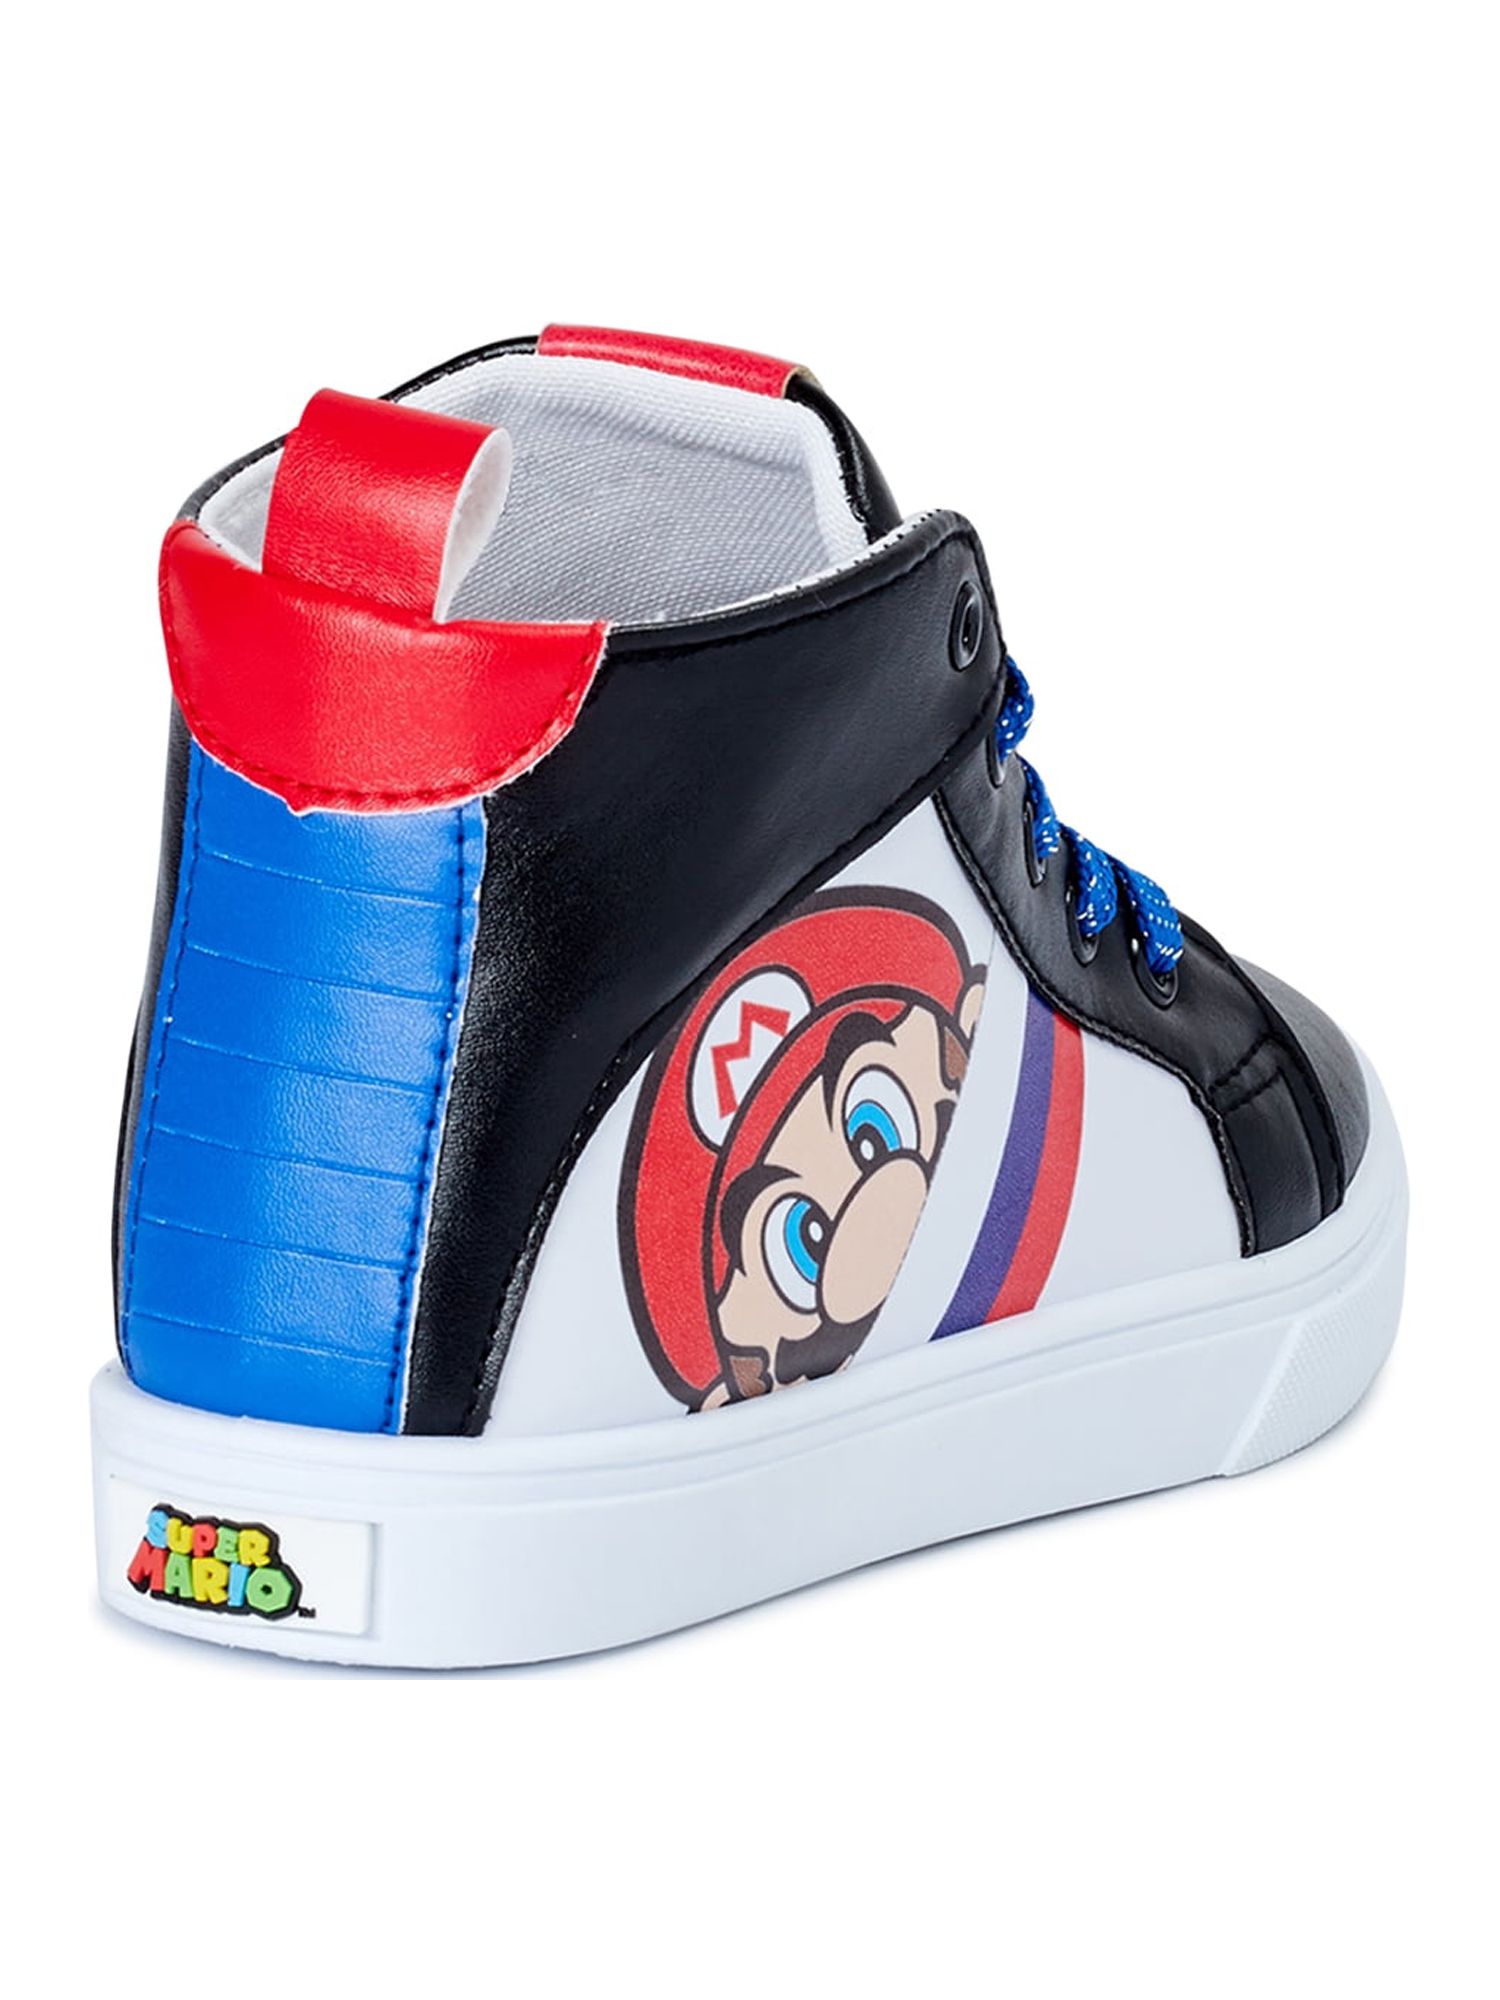 Mario Boys High Top Sneakers - image 3 of 6